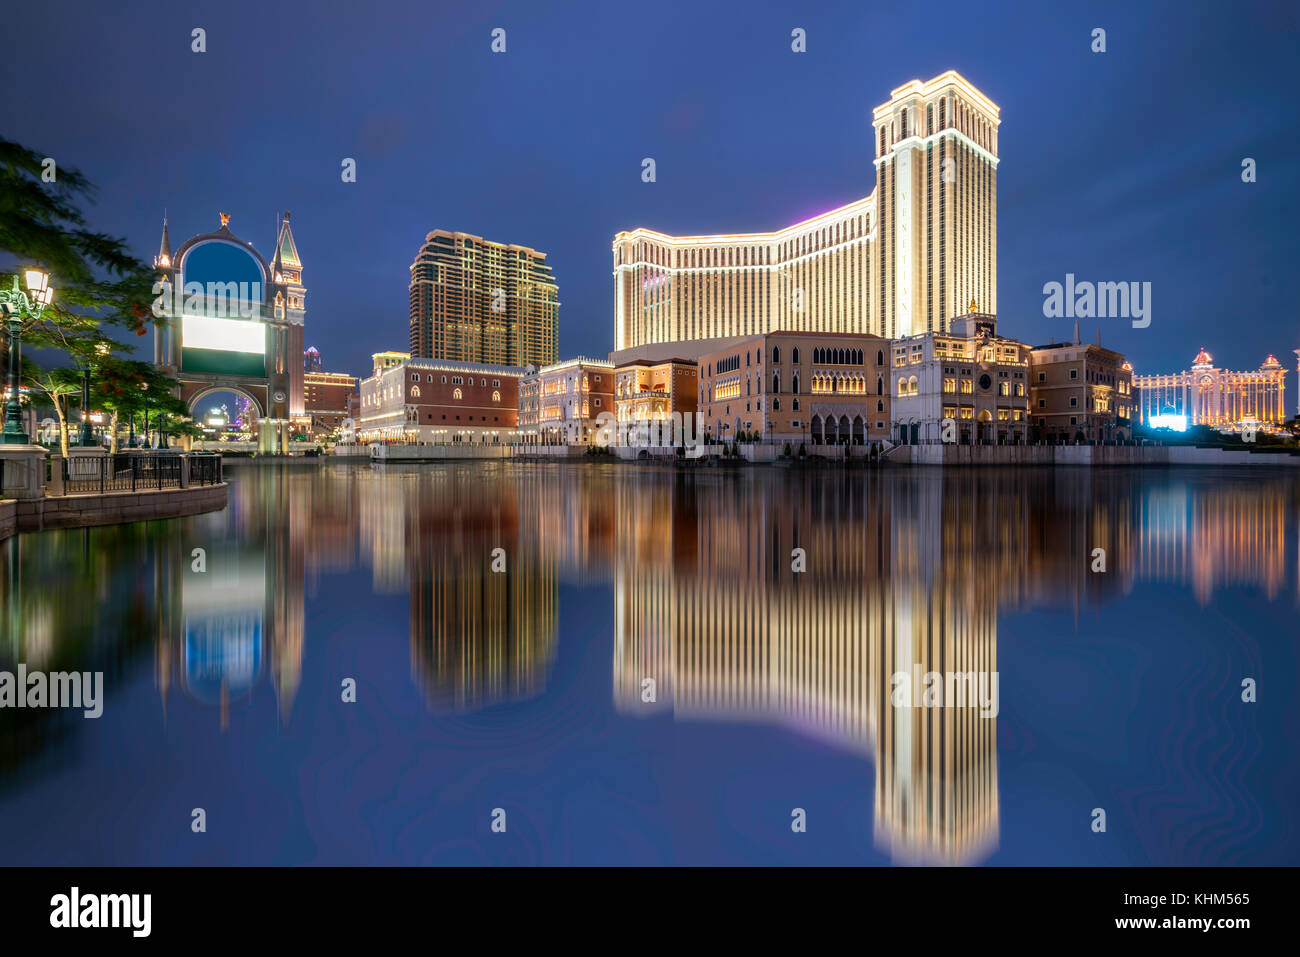 The Venetian Macao Casino and Hotel in Macau (Macao) , China Stock Photo